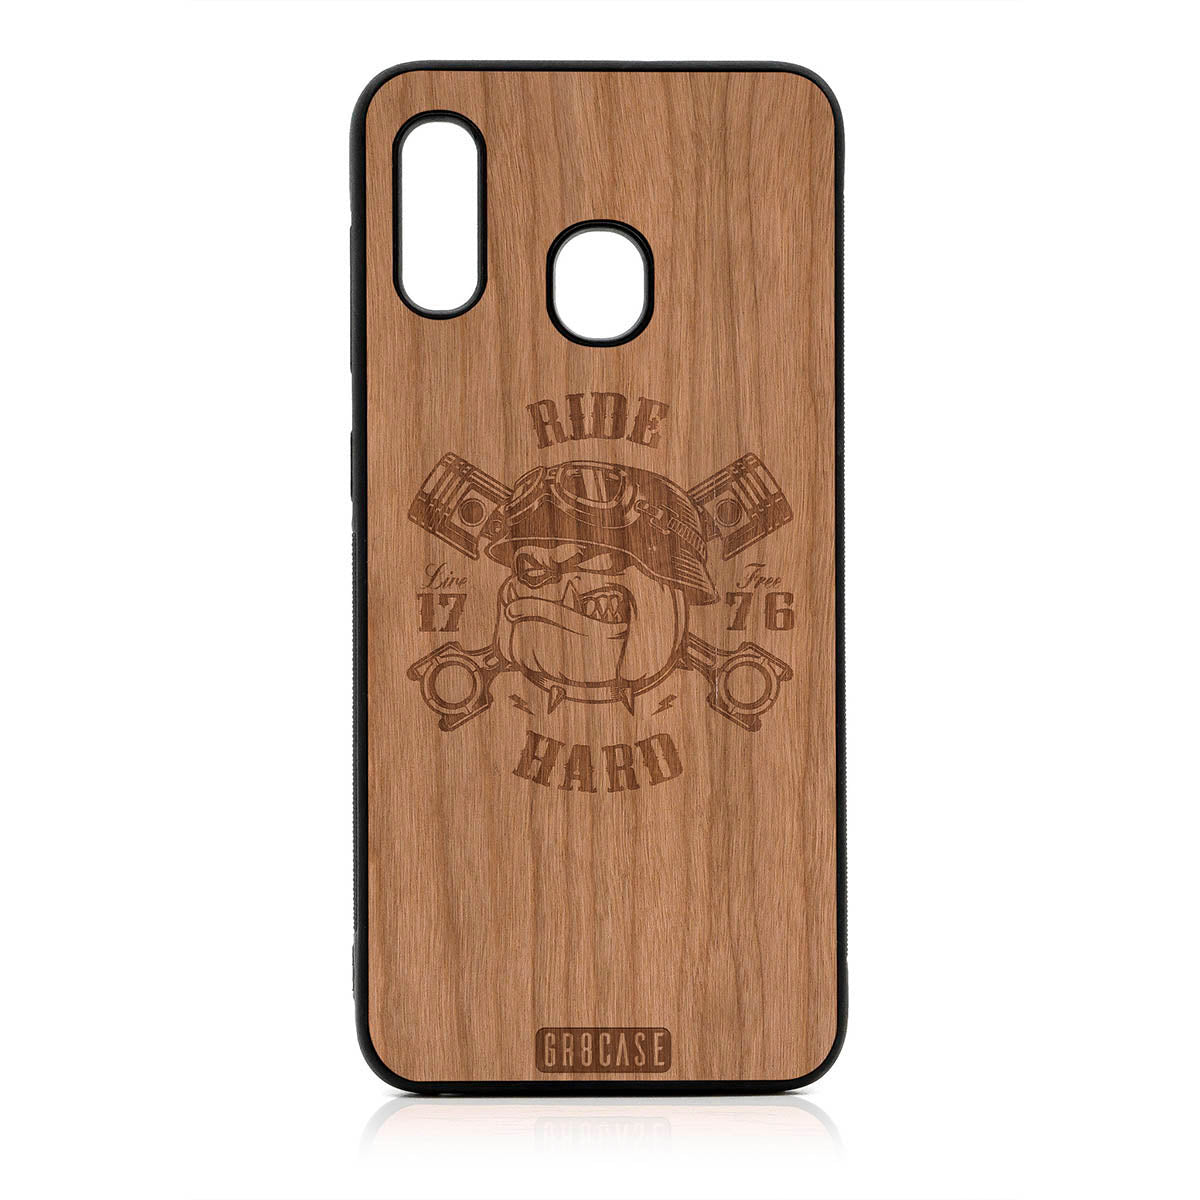 Ride Hard Live Free (Biker Dog) Design Wood Case For Samsung Galaxy A20 by GR8CASE